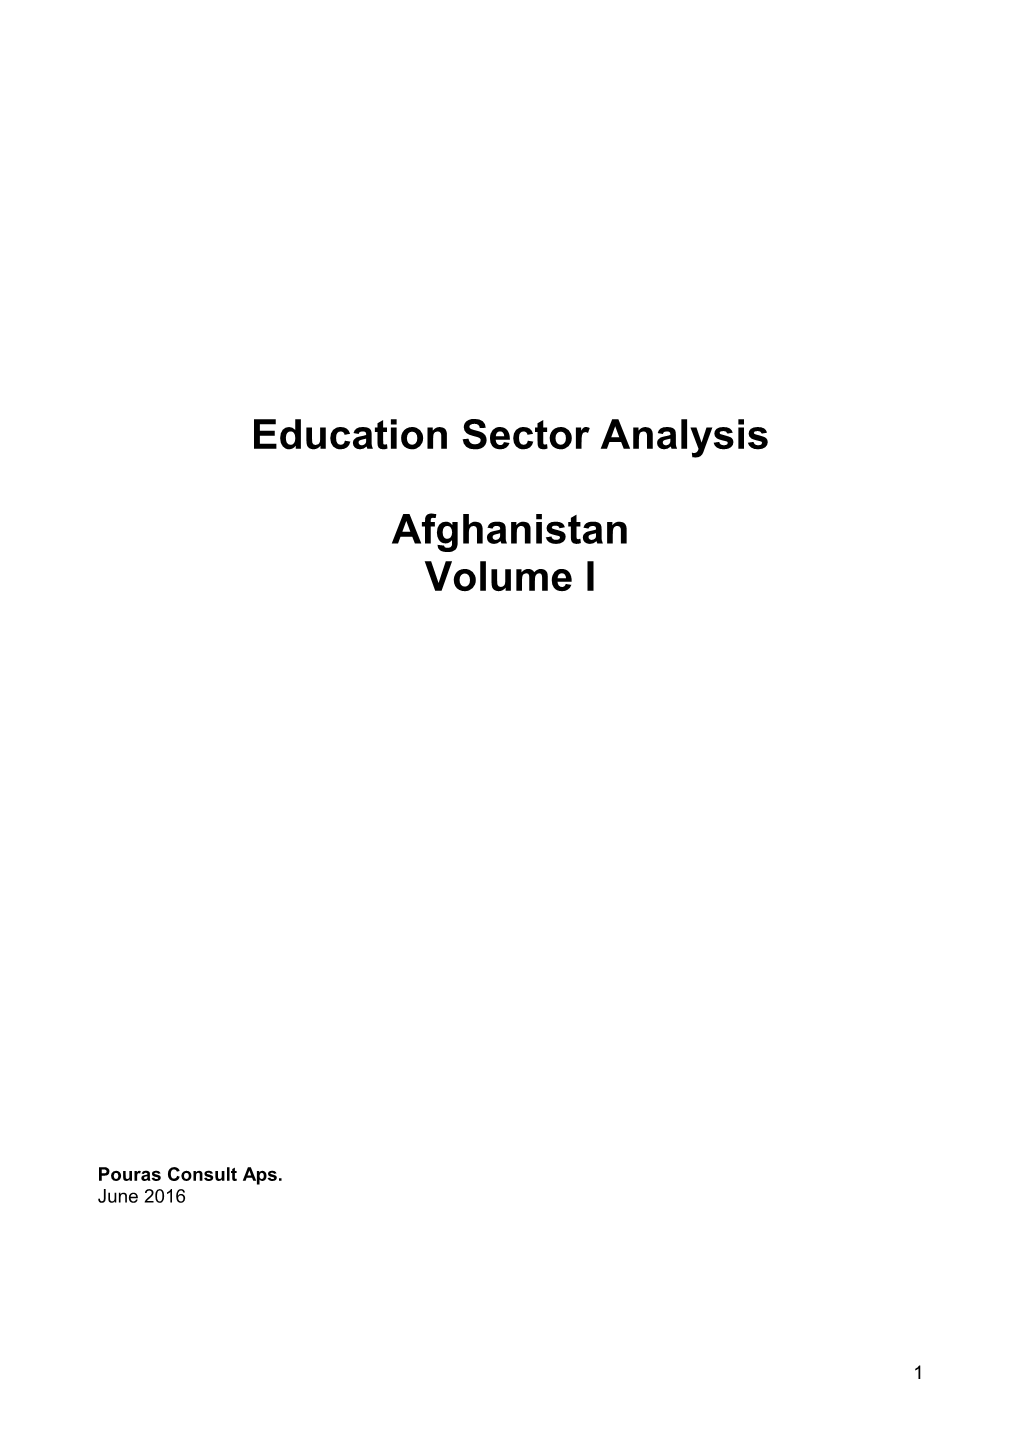 Education Sector Analysis Afghanistan Volume I